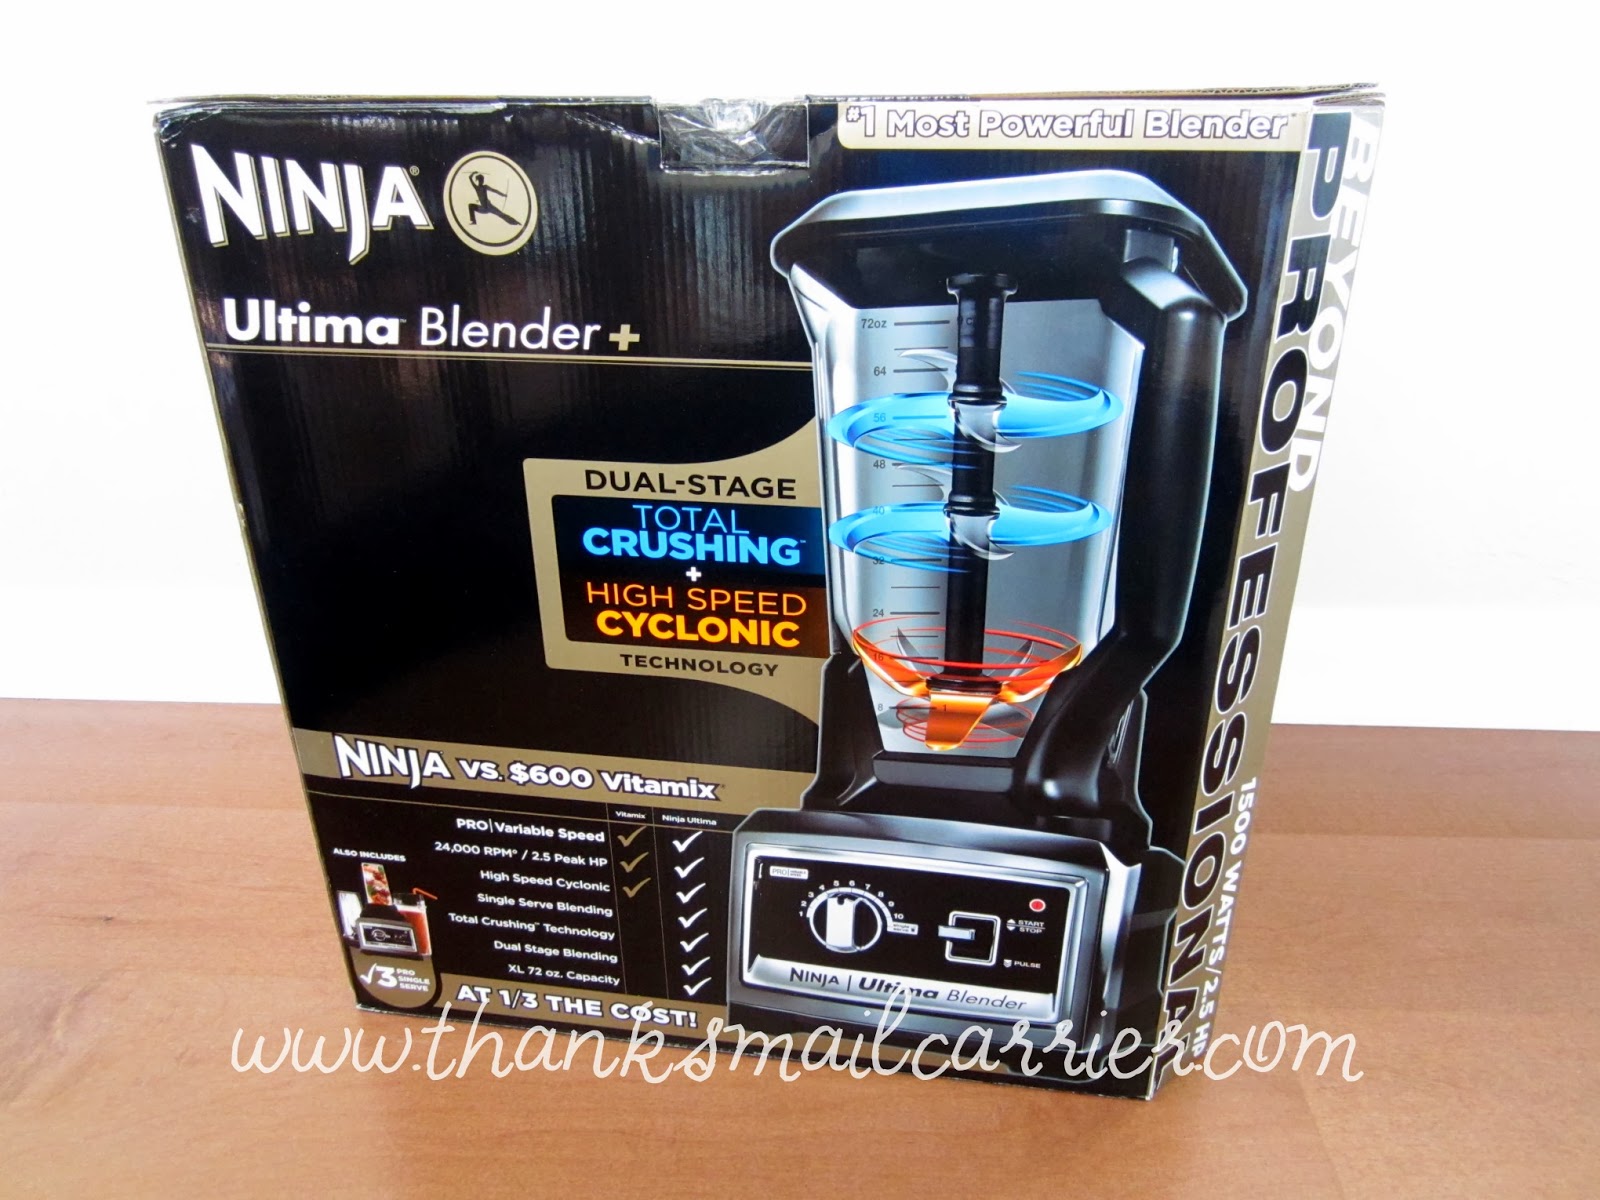 Ninja Ultima blender box